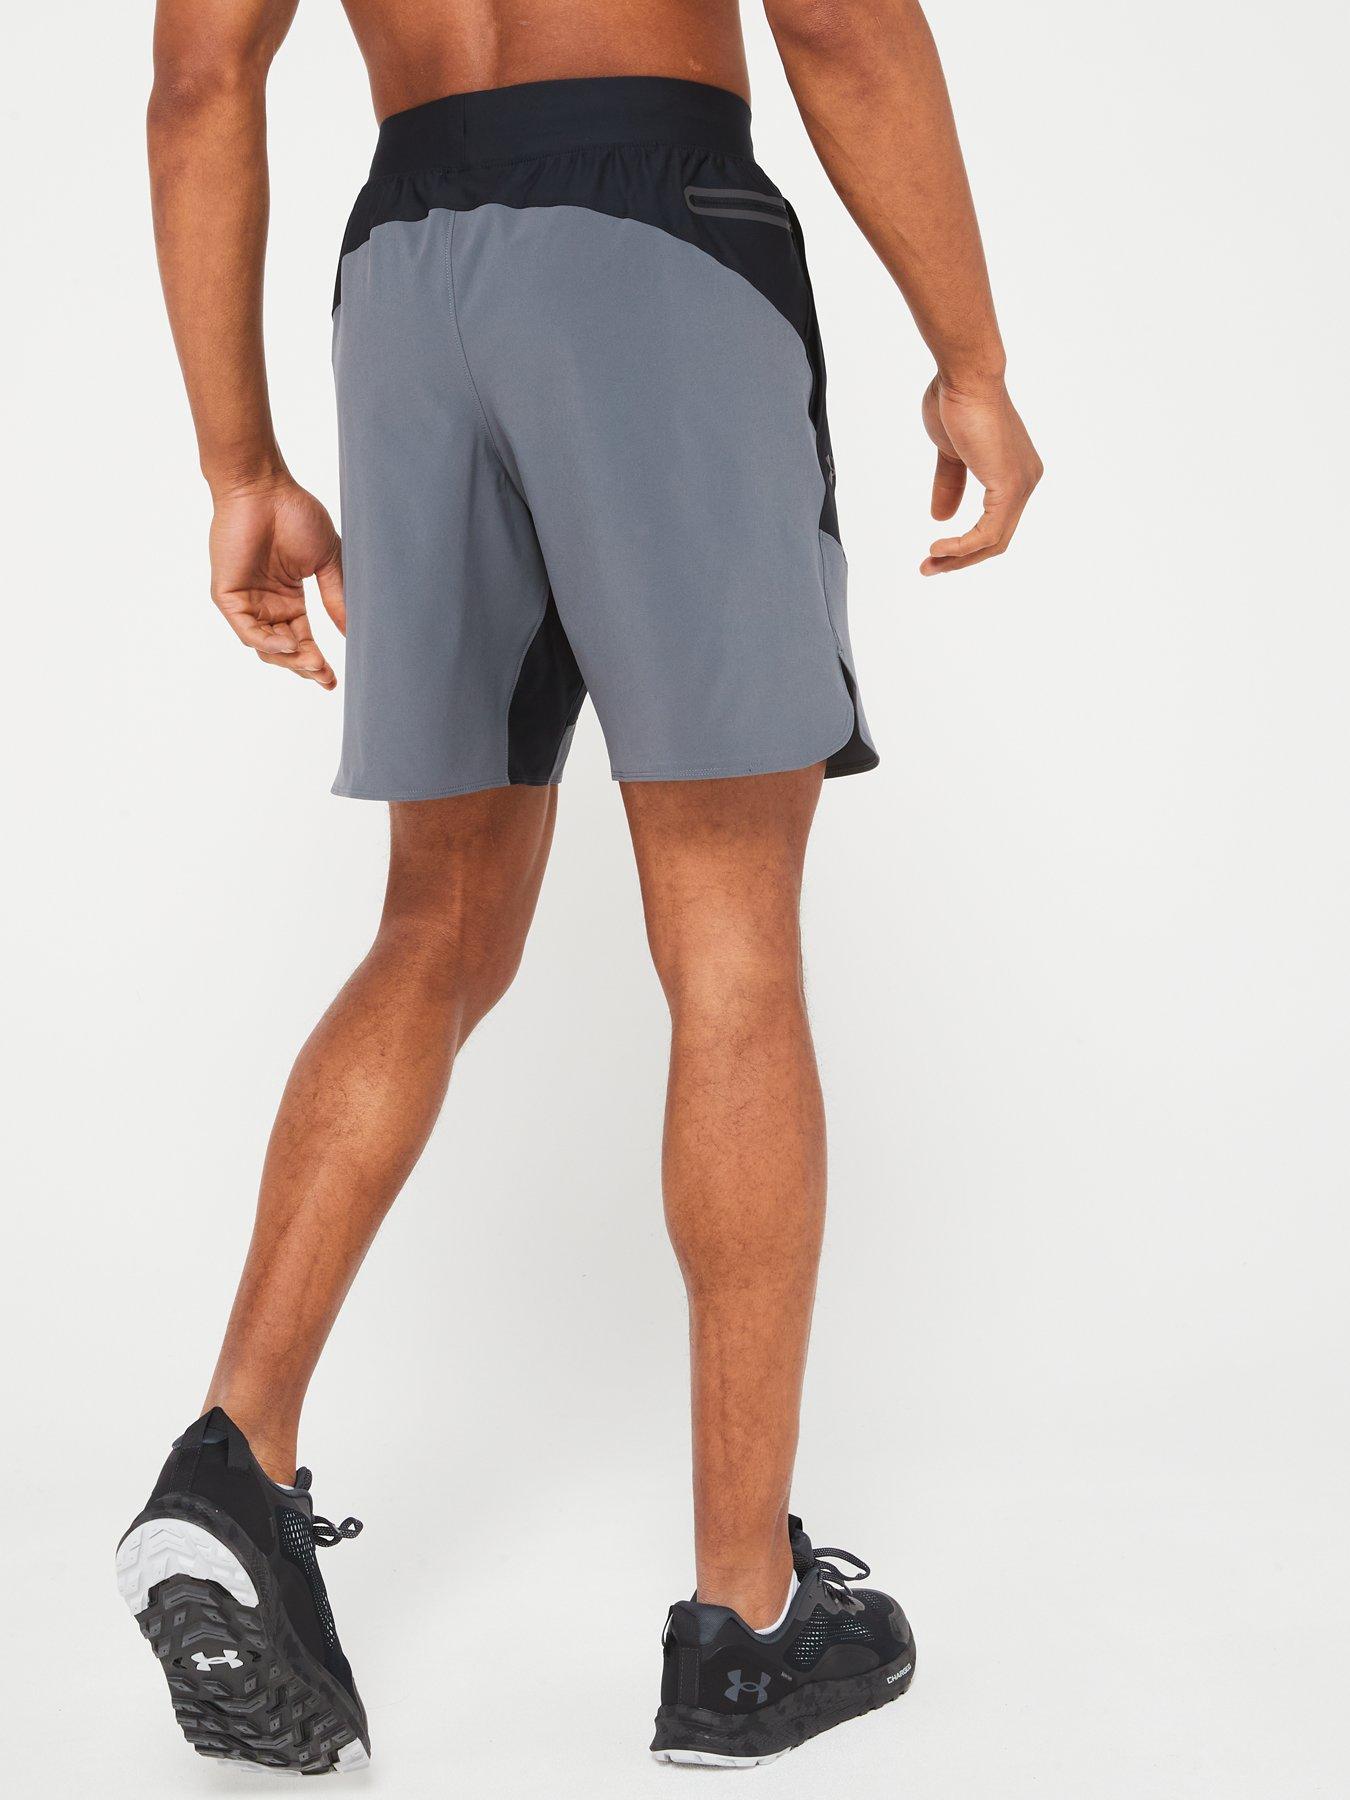 UNDER ARMOUR Men's Training Peak Woven Hybrid Shorts - Black/Grey